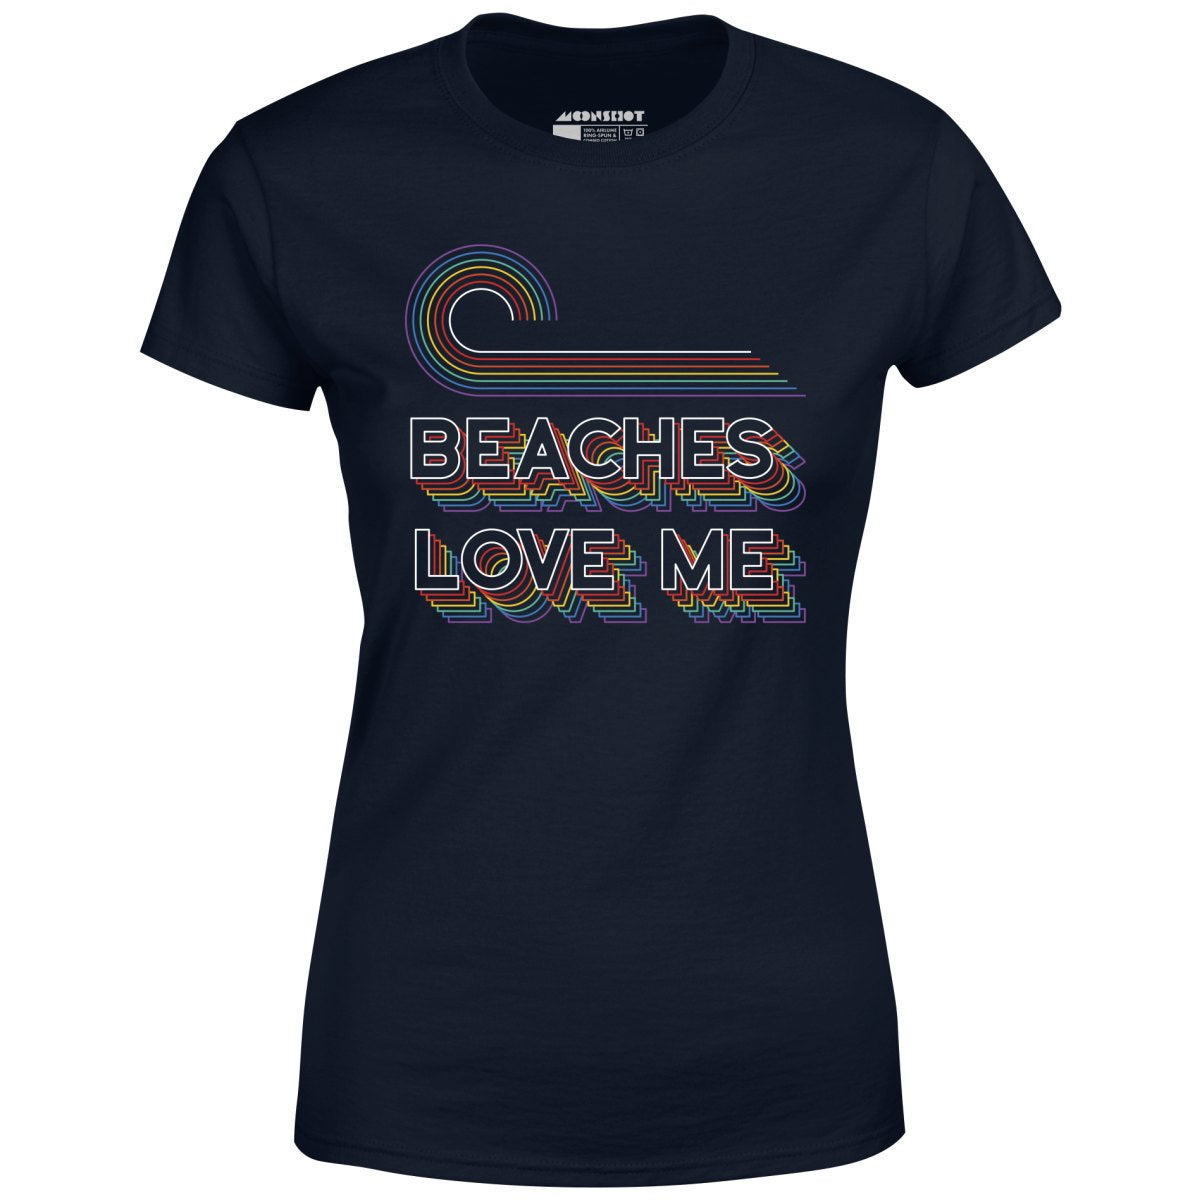 Beaches Love Me - Women's T-Shirt